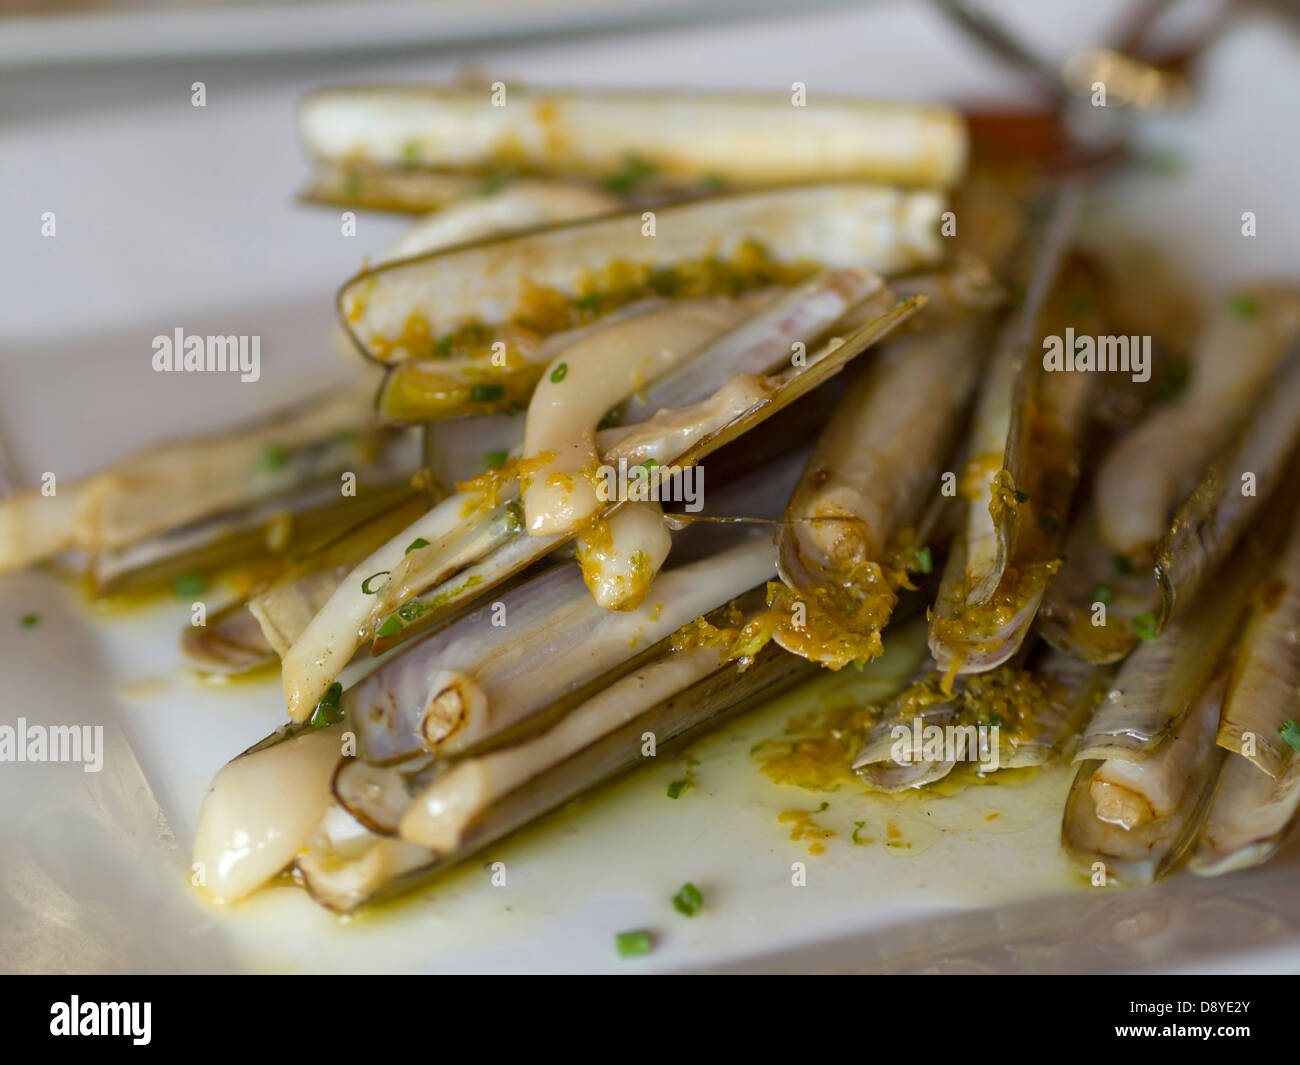 Gourmet dish with razor shells Stock Photo